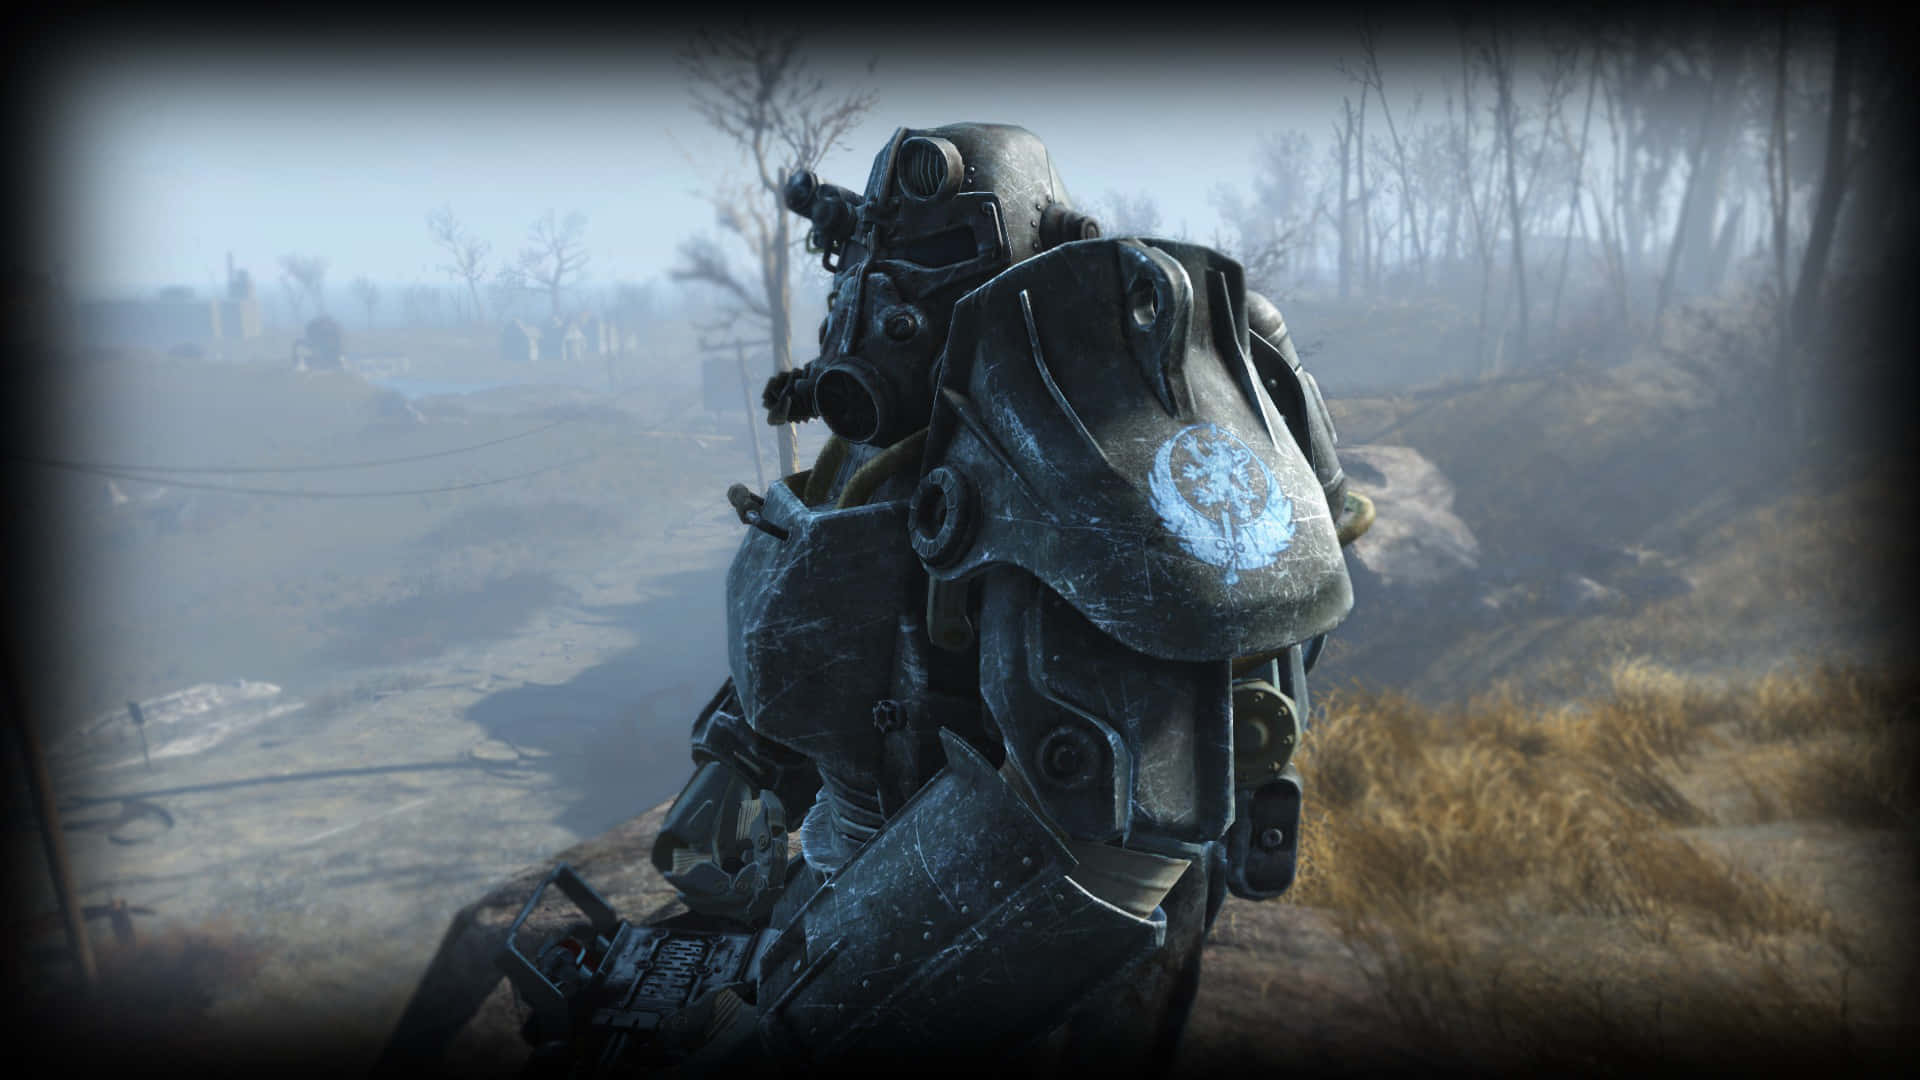 Majestic Fallout 4 Power Armor Ready for Battle Wallpaper